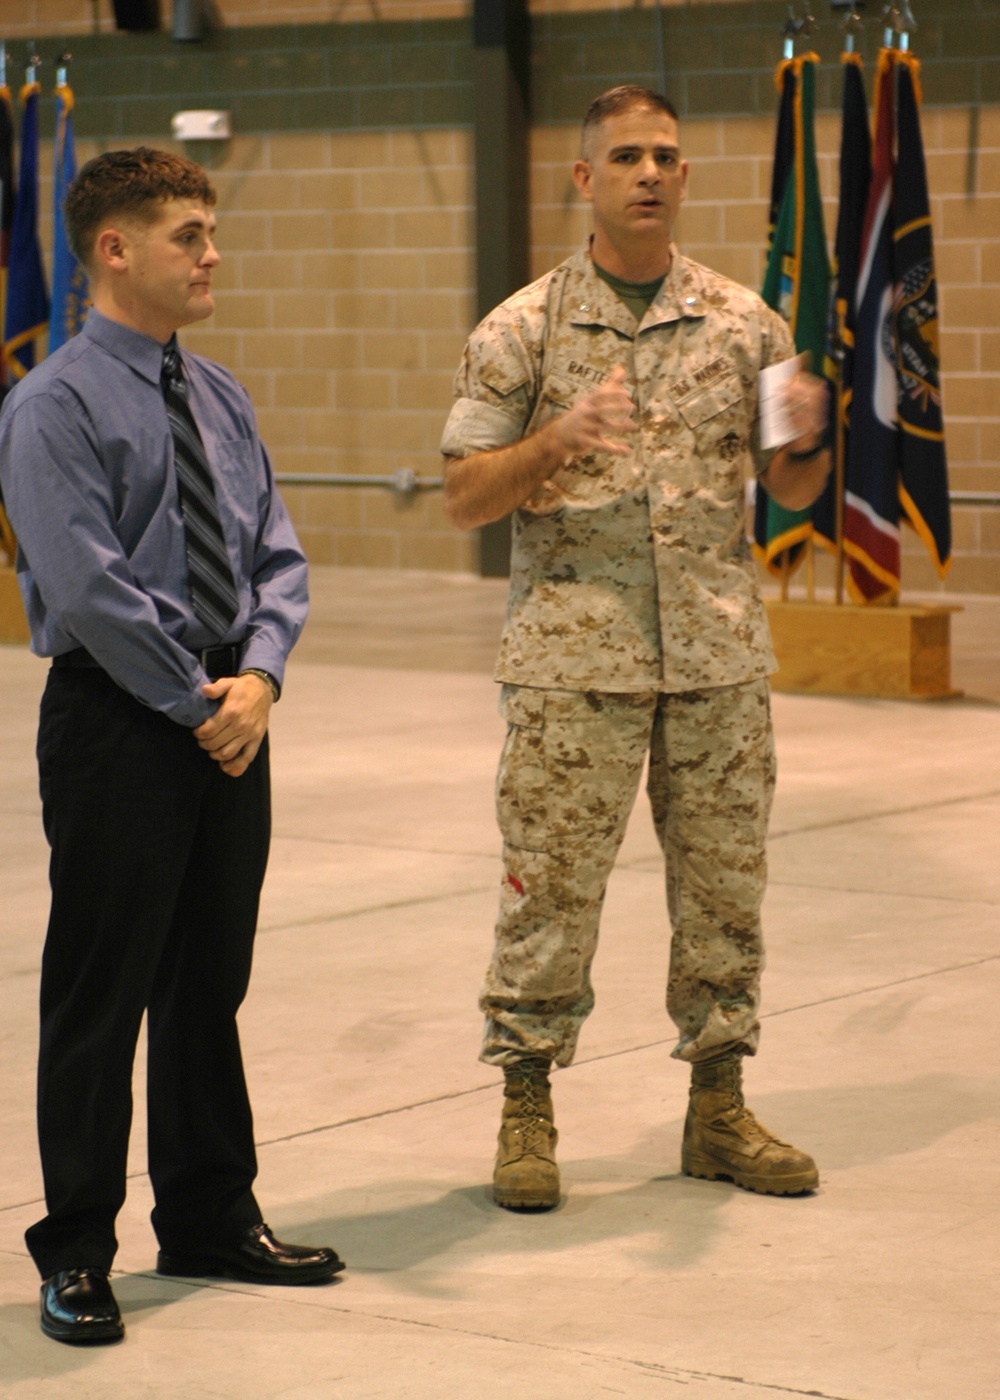 Initiative, courage, dedication to duty earn Marine Bronze Star